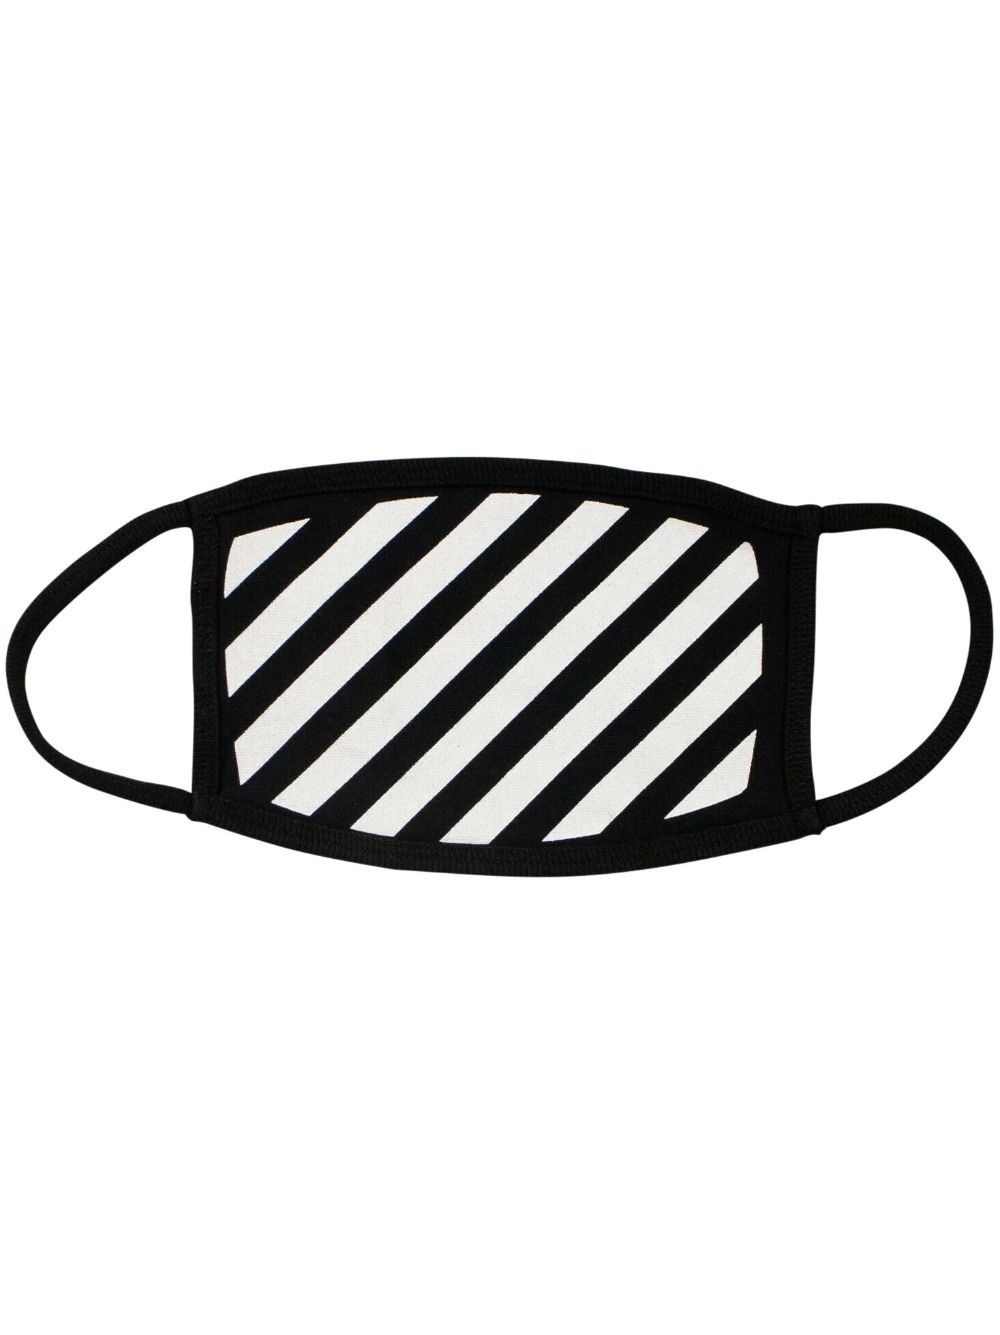 Diag Stripe mask - 1